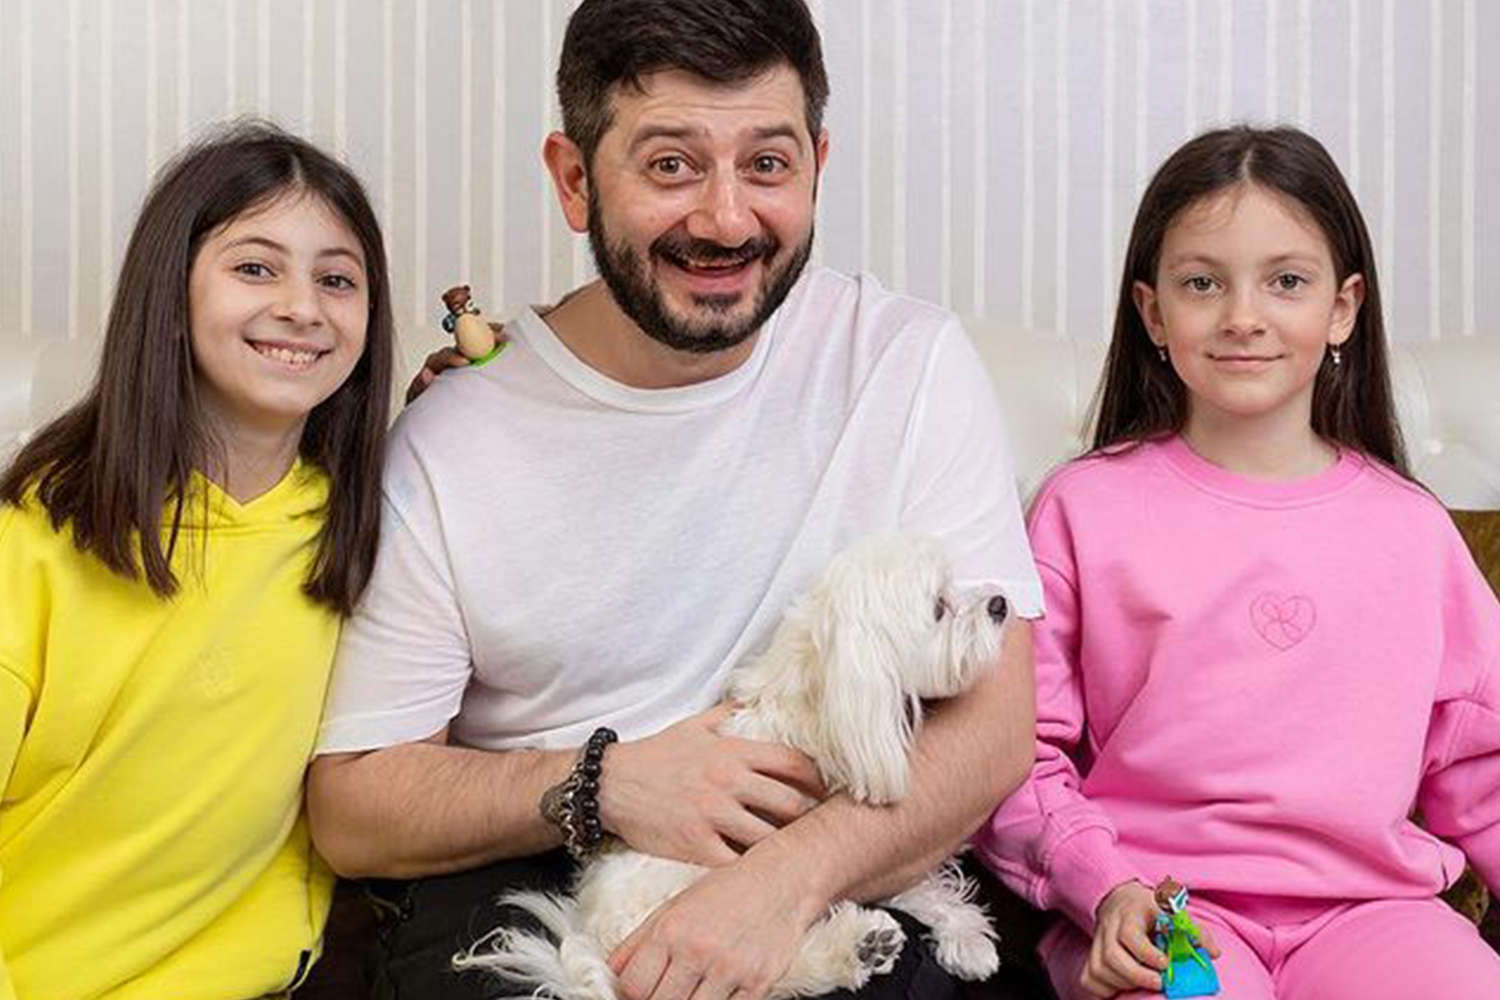 Михаил галустян с дочками фото